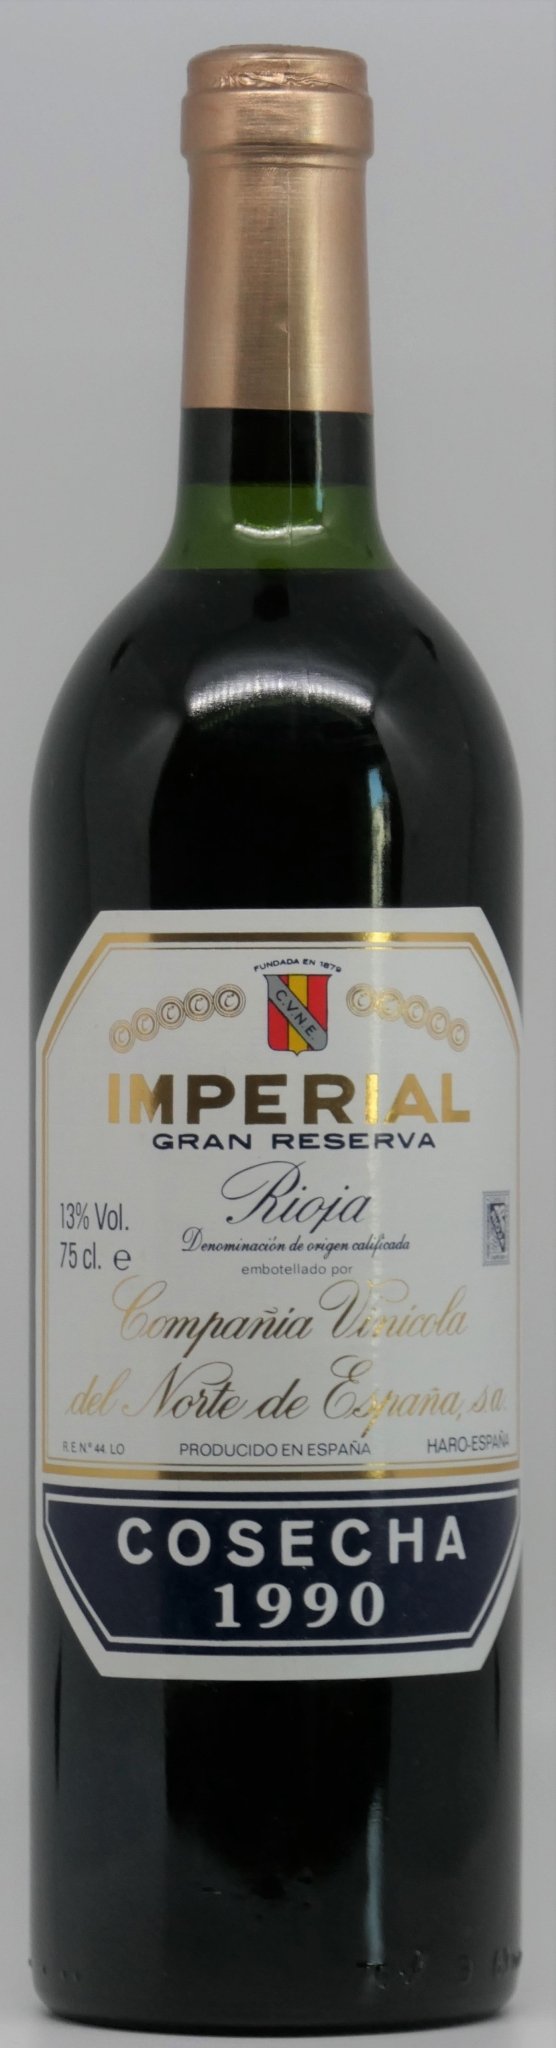 Cune (CVNE) Imperial Gran Reserva Rioja 1994 - The Spanish Table